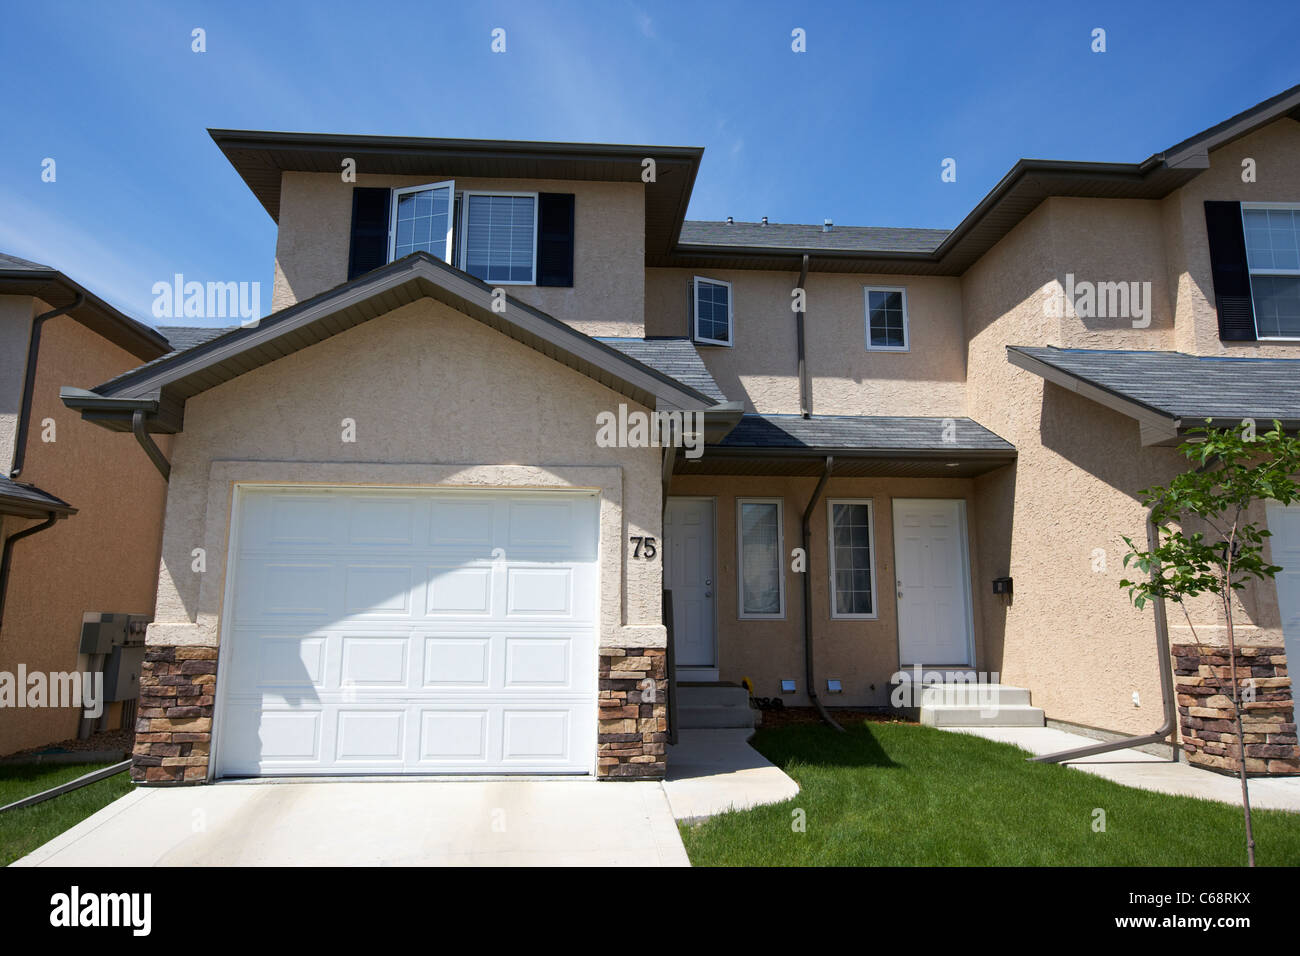 Semi staccate proprietà condominio starter home su proprietà gestita Saskatoon Saskatchewan Canada Foto Stock